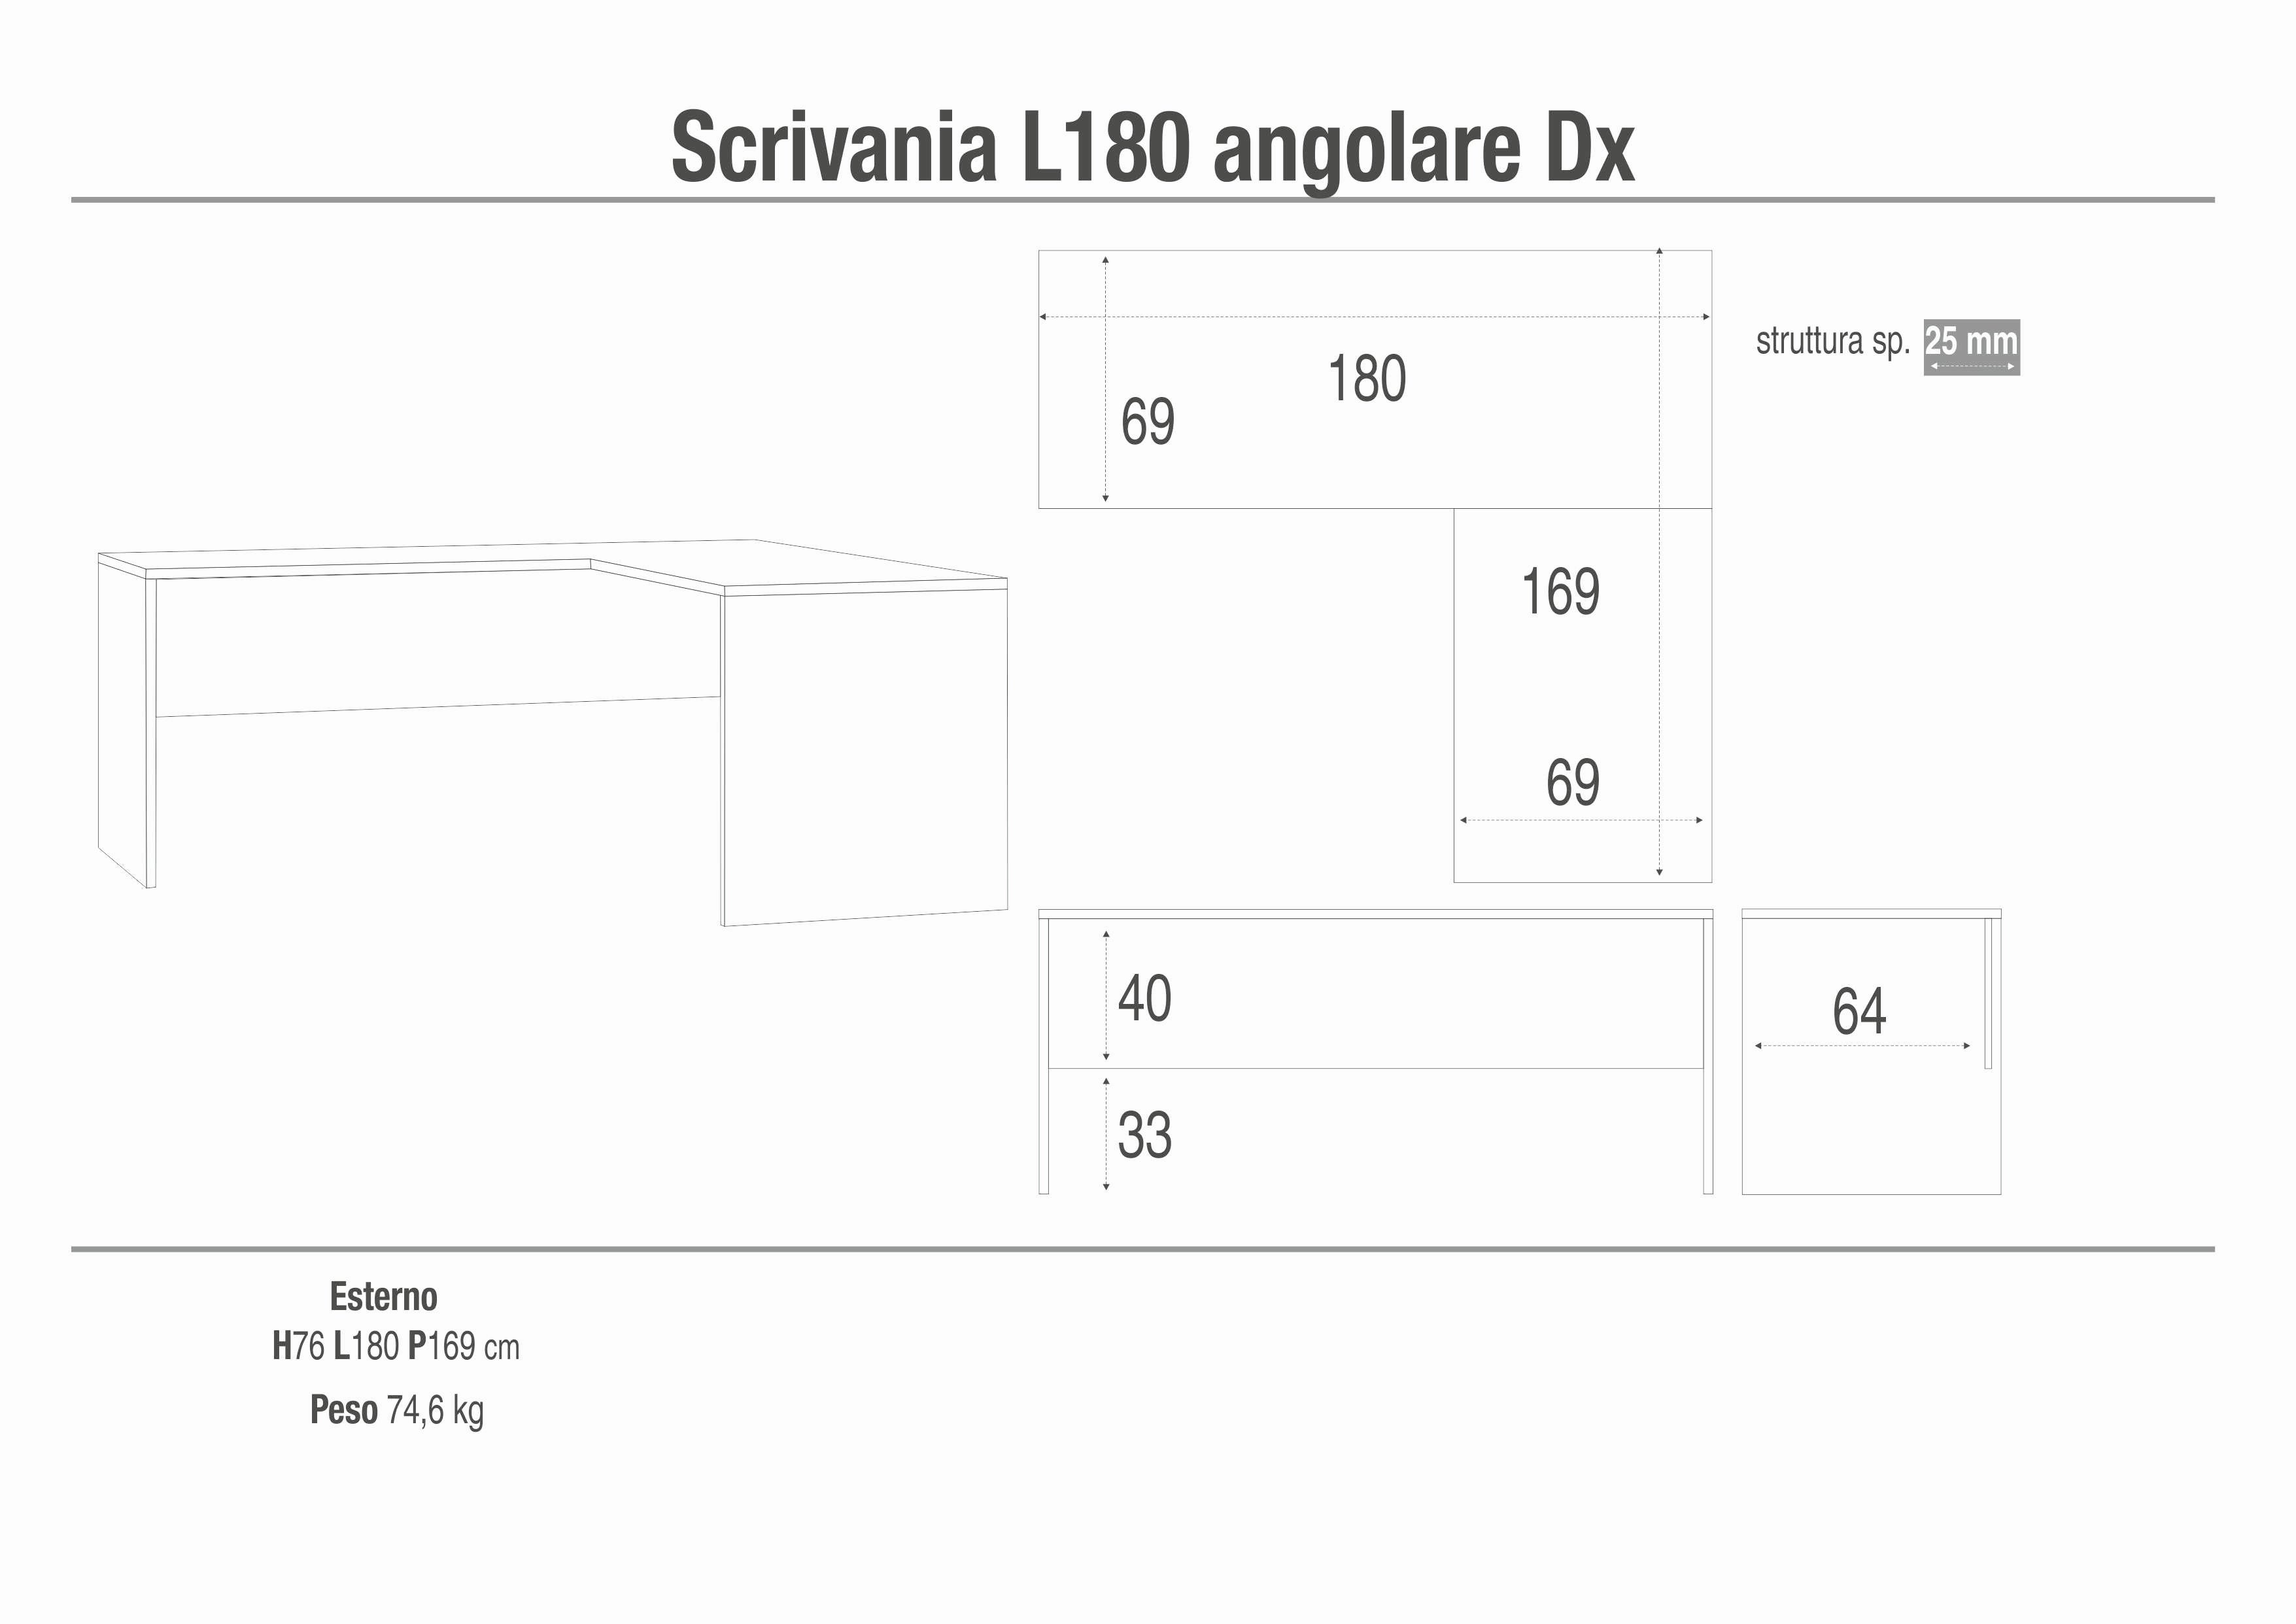 SCRIVANIA L180 ANG DX KIT DB6301K